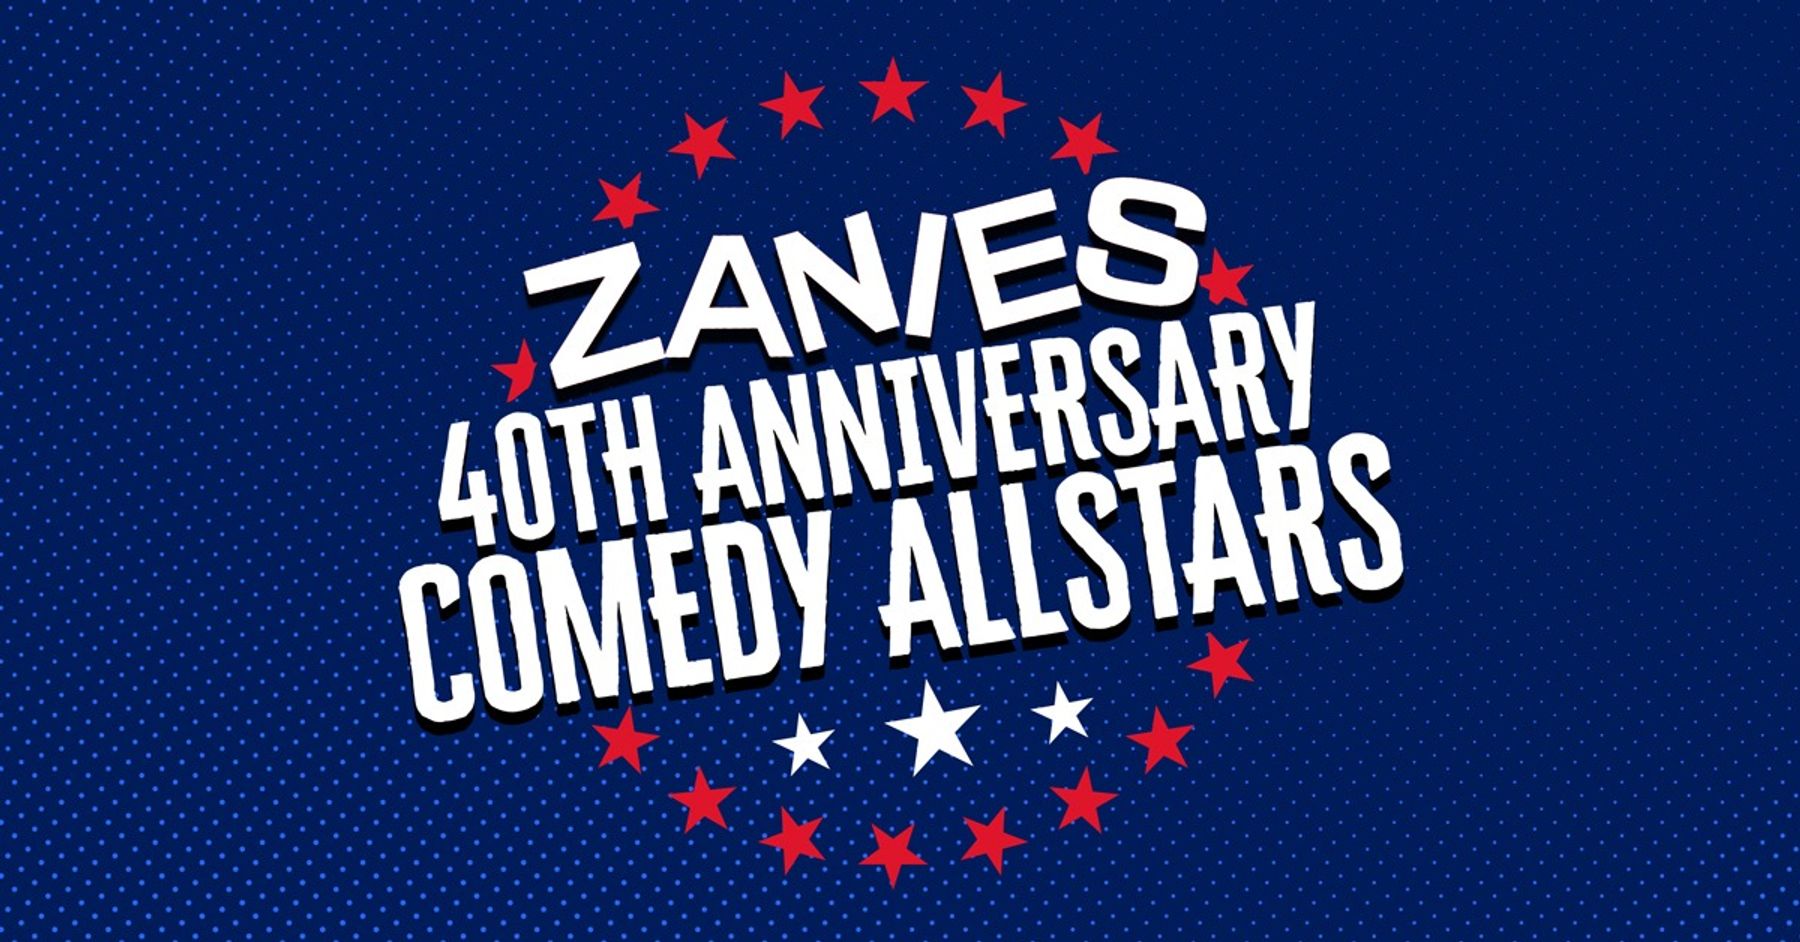 Zanies 40th Anniversary Downtown Nashville